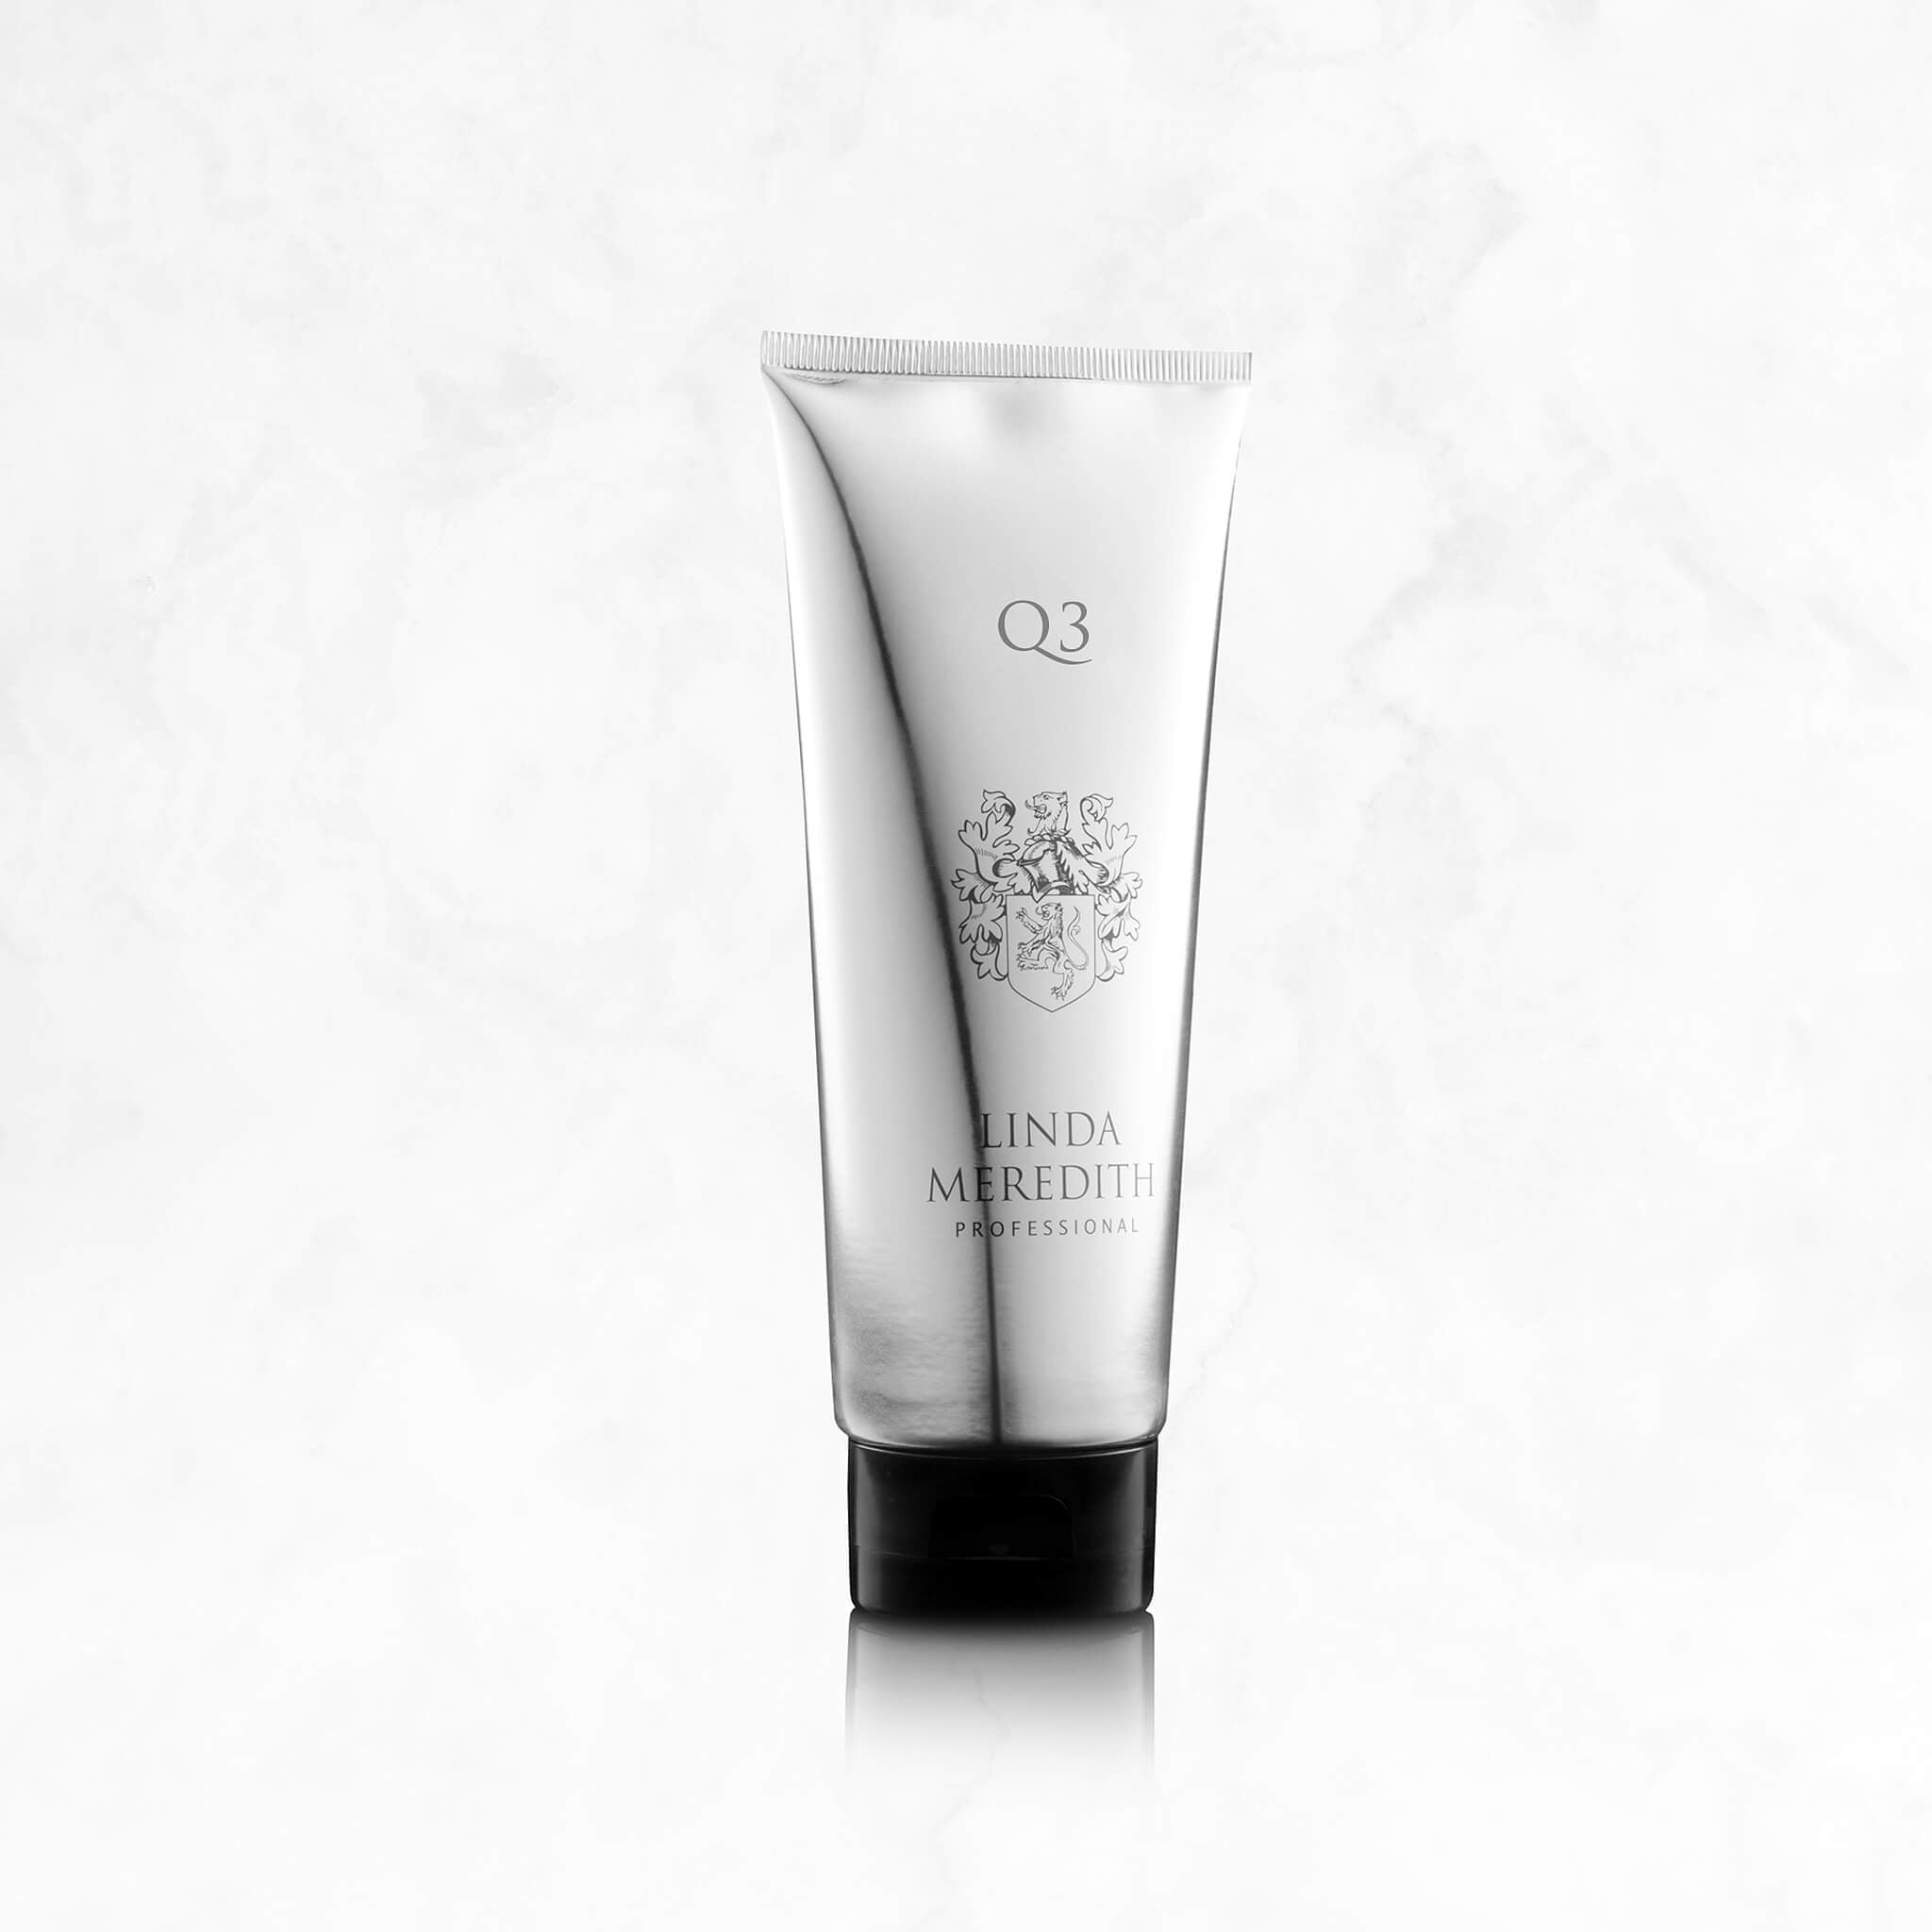 Q3 Anti-Wrinkle Cream